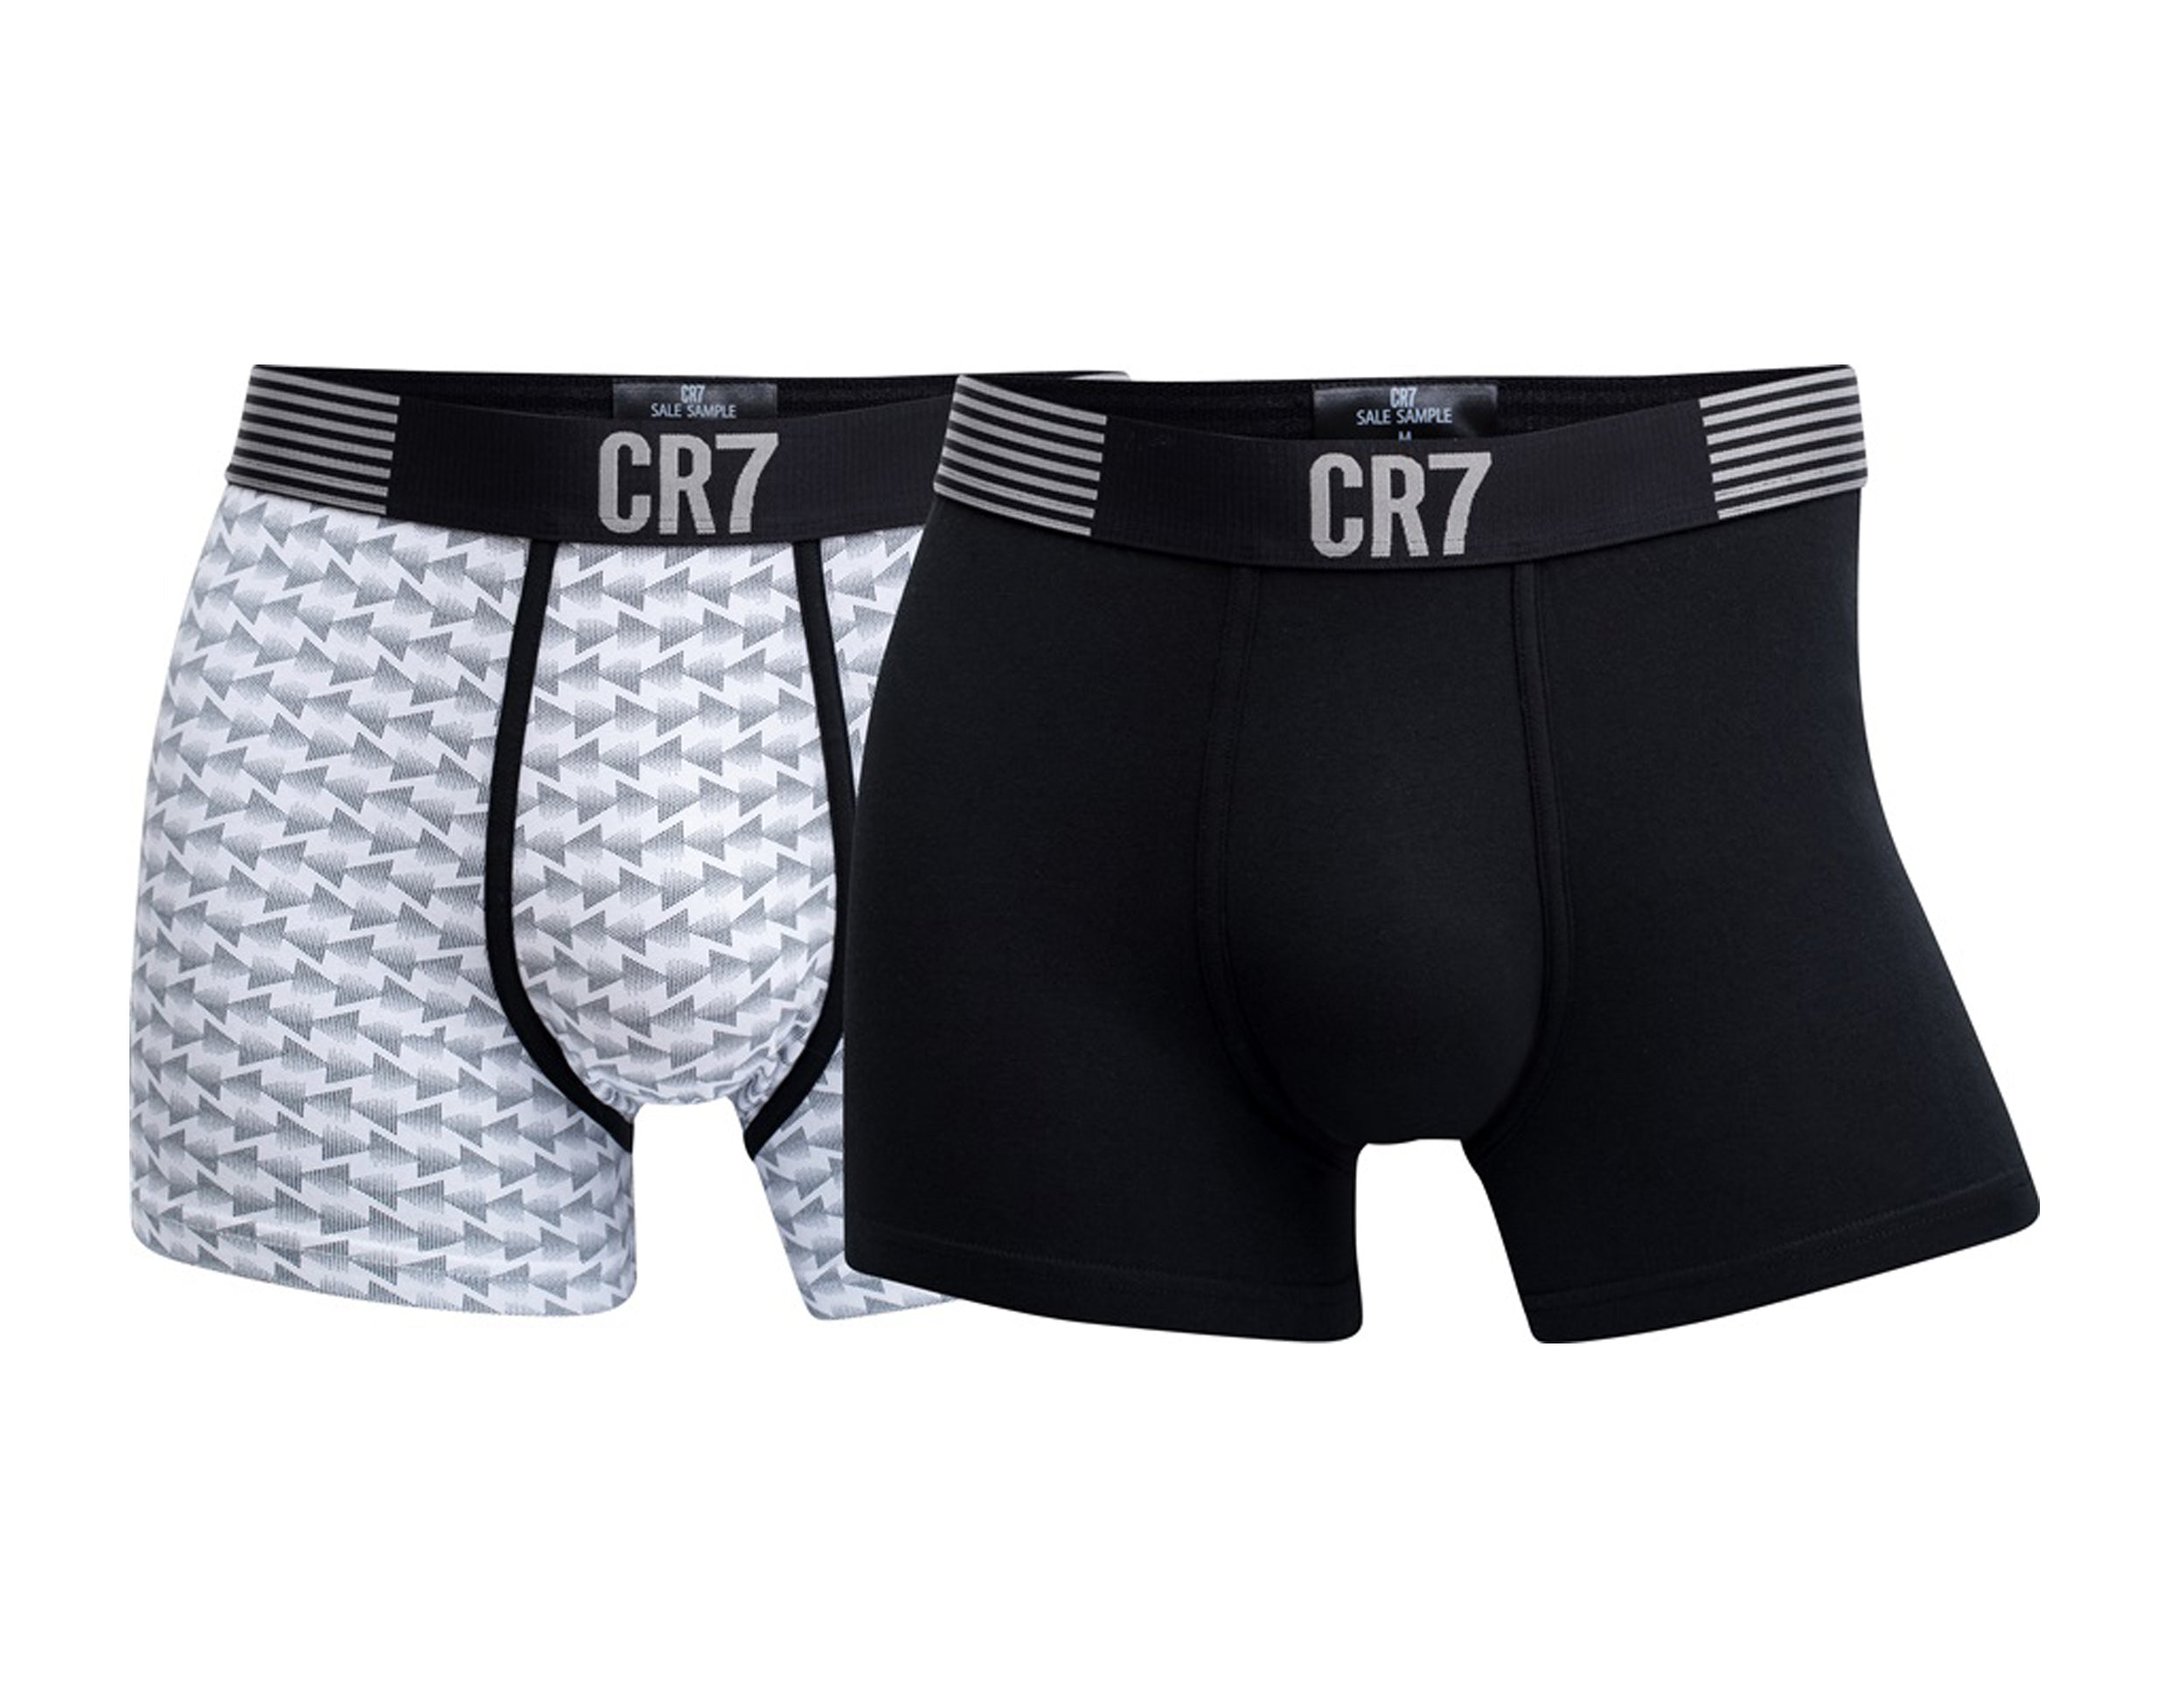 Cristiano Ronaldo CR7 3-Pack Briefs Blk/White/Grey Men's Underwear  8100-6610-633